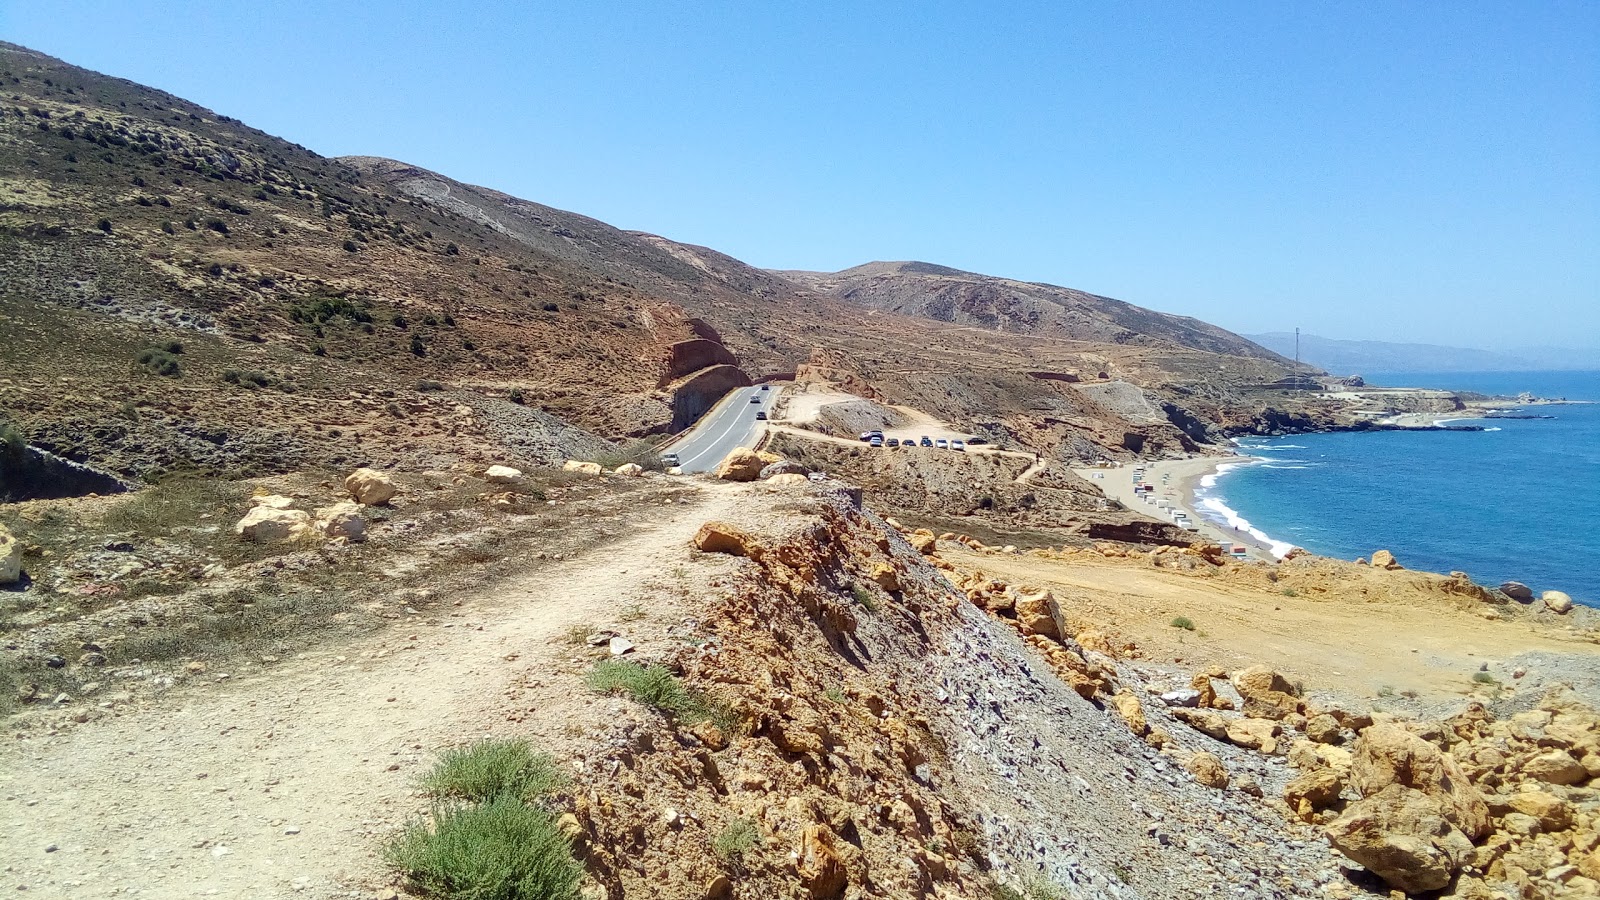 Photo of Plage de Sidi Driss with long straight shore